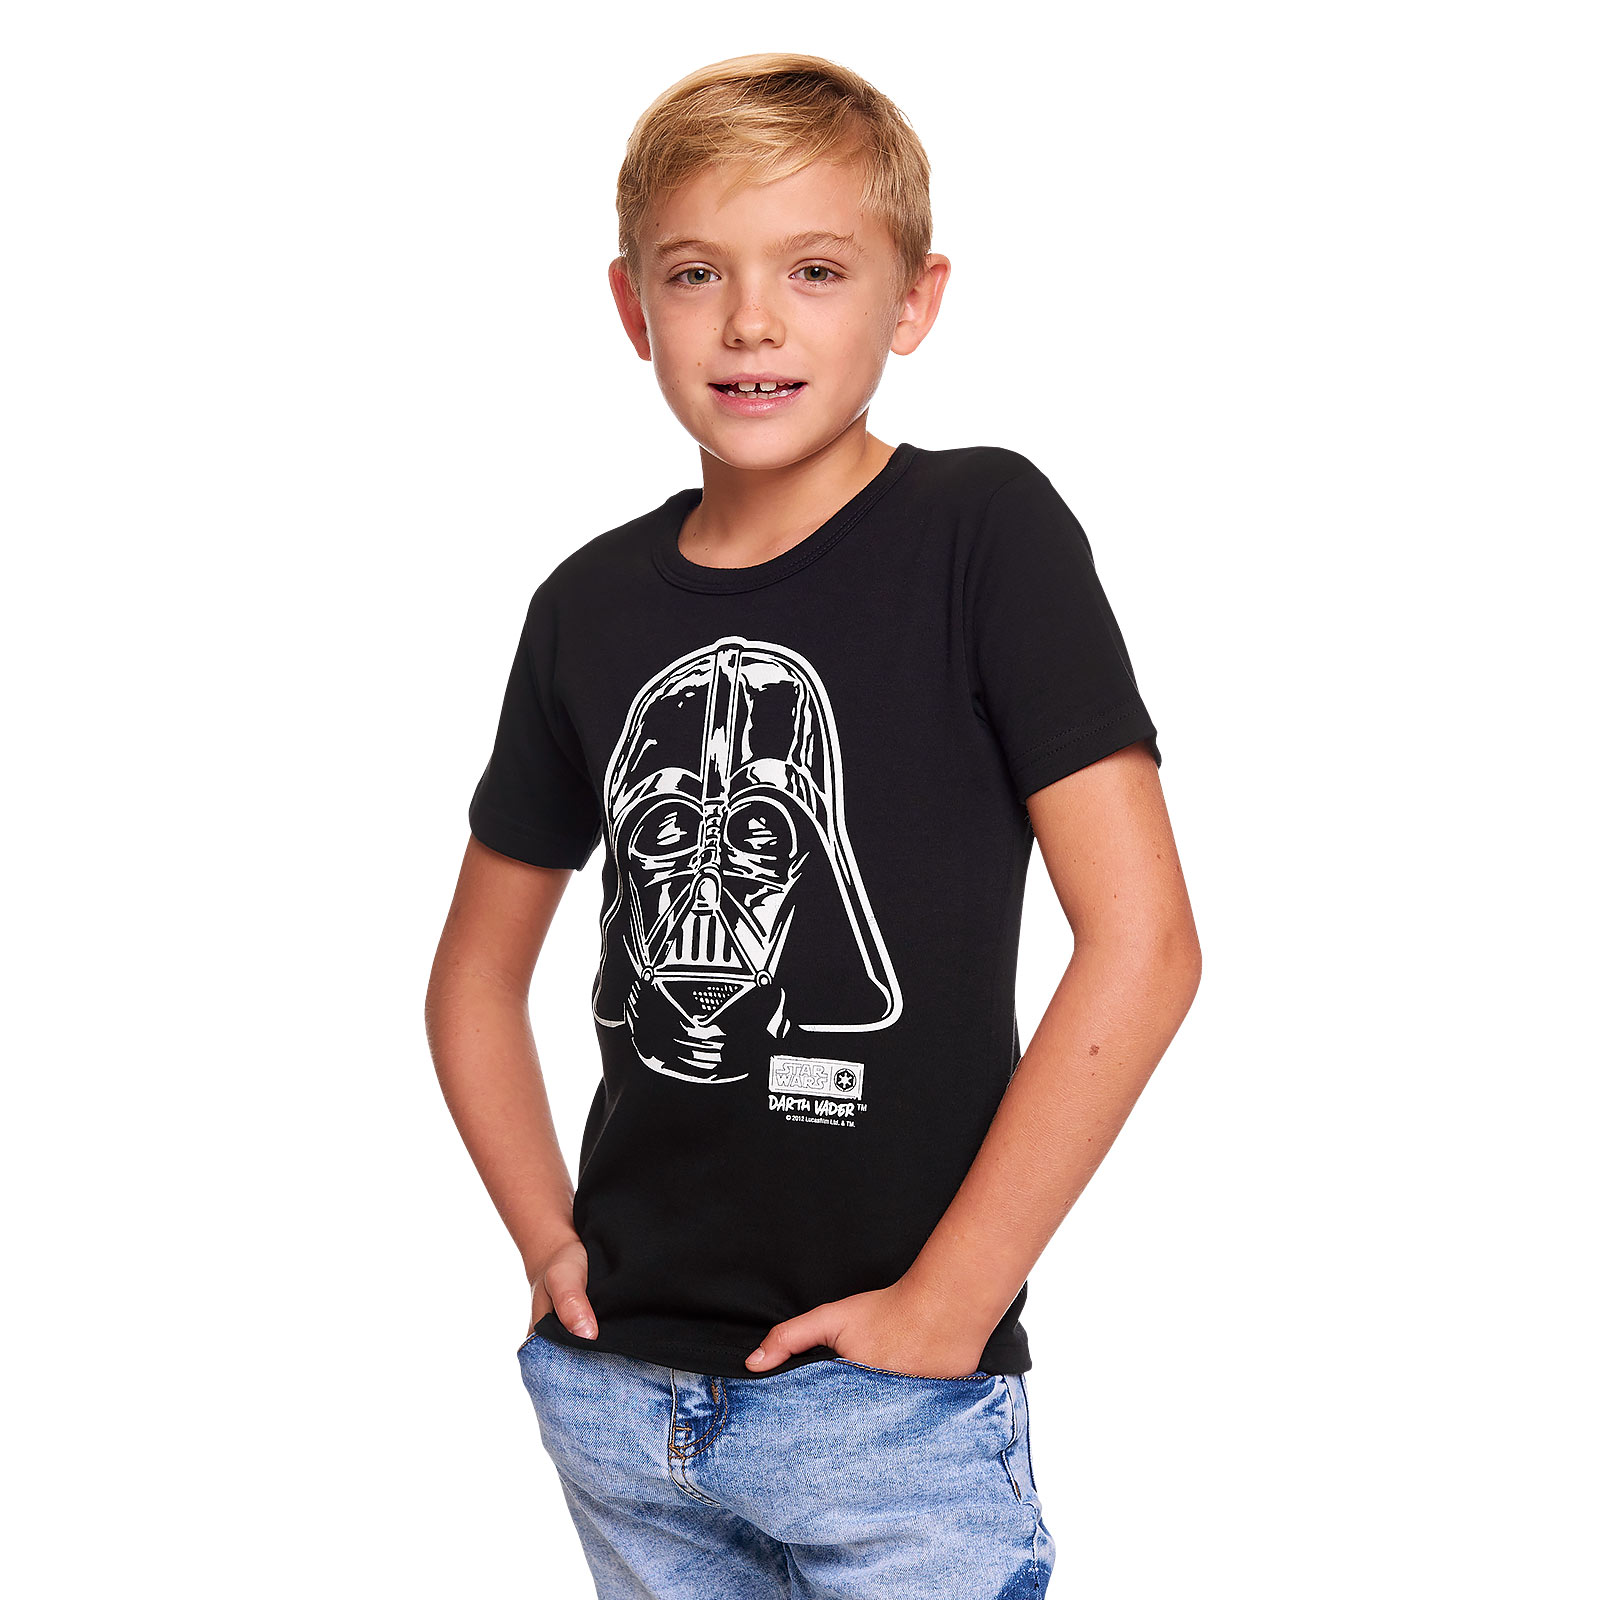 Star Wars - Darth Vader Portret Kindershirt